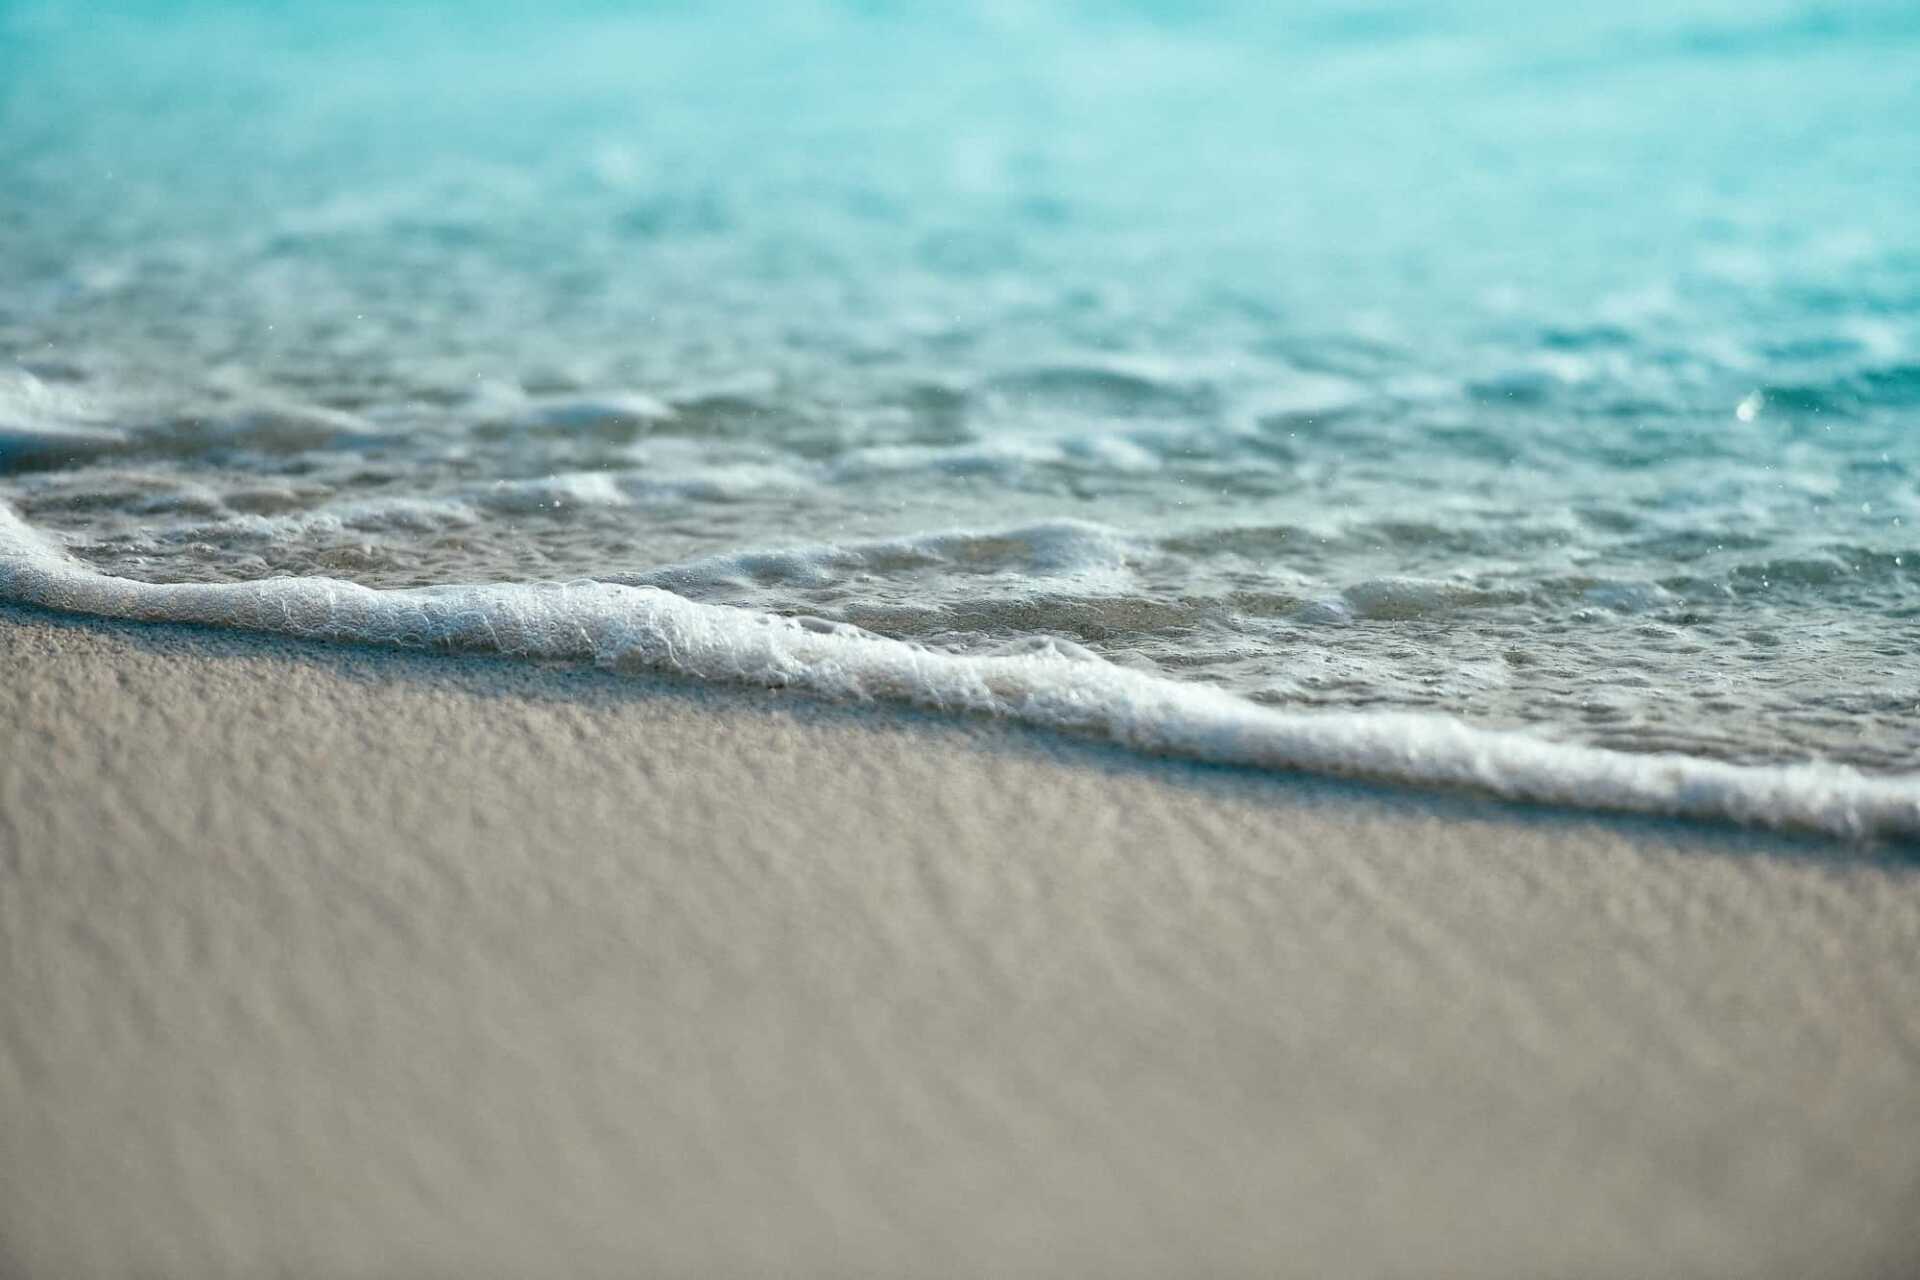 Sea washing up on sand